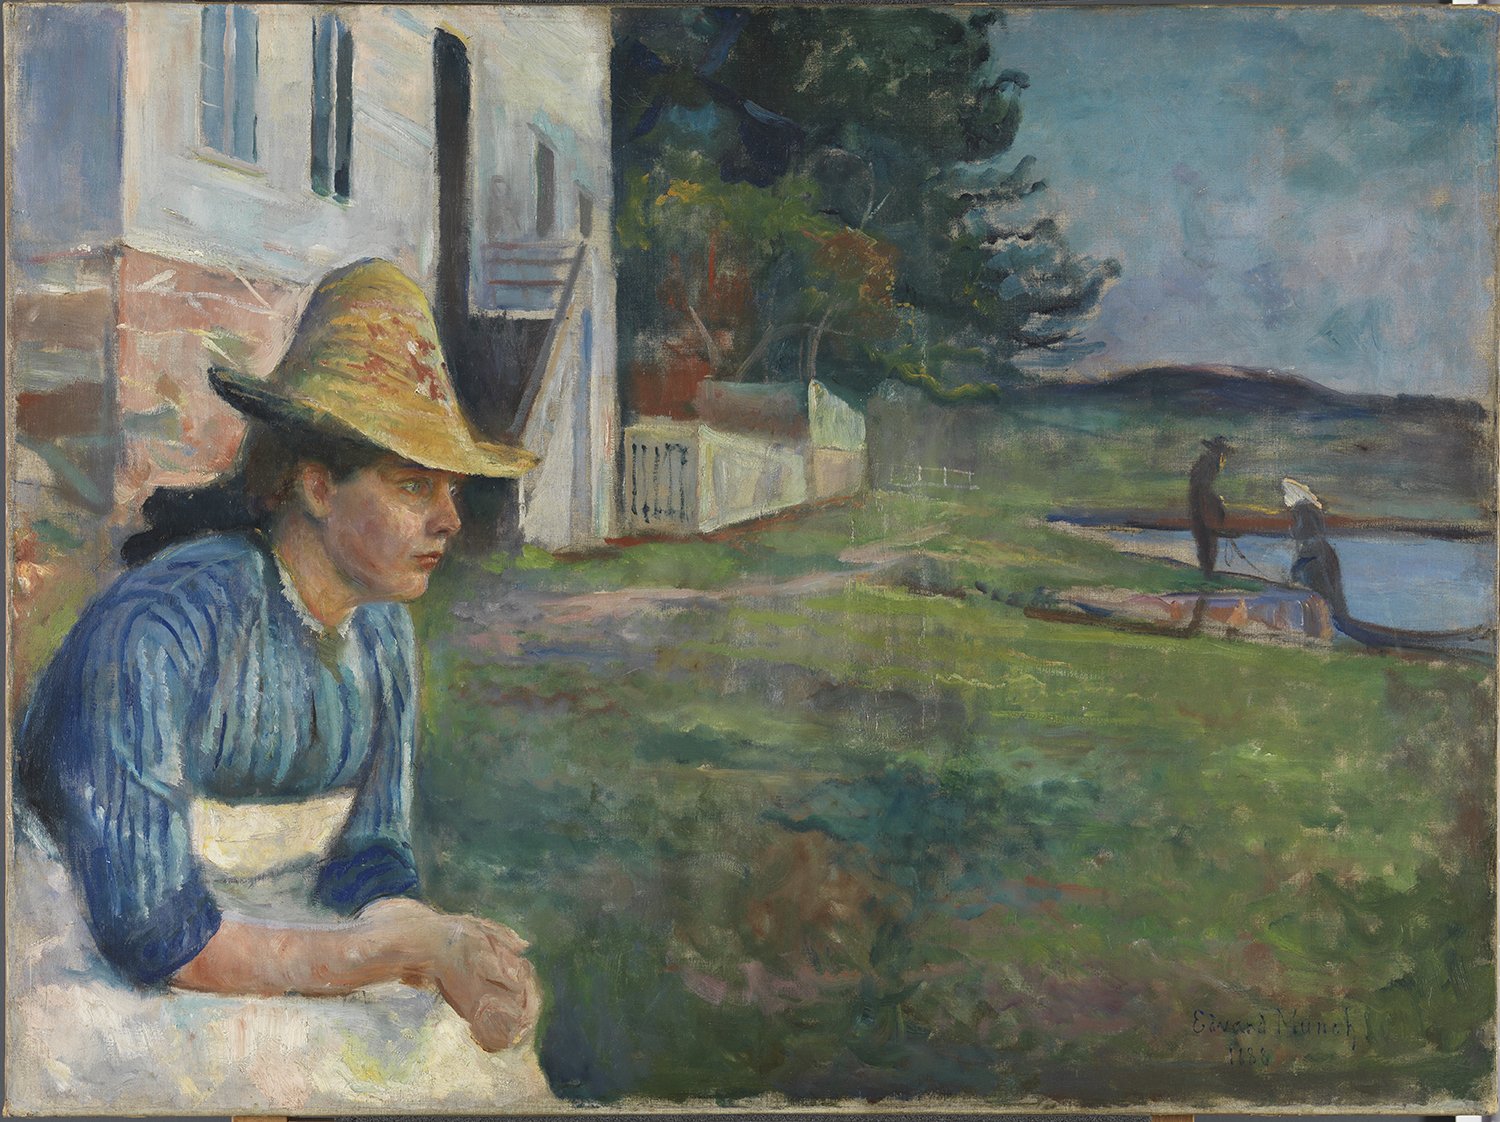 Imagen visible de la obra de Munch "Atardecer"